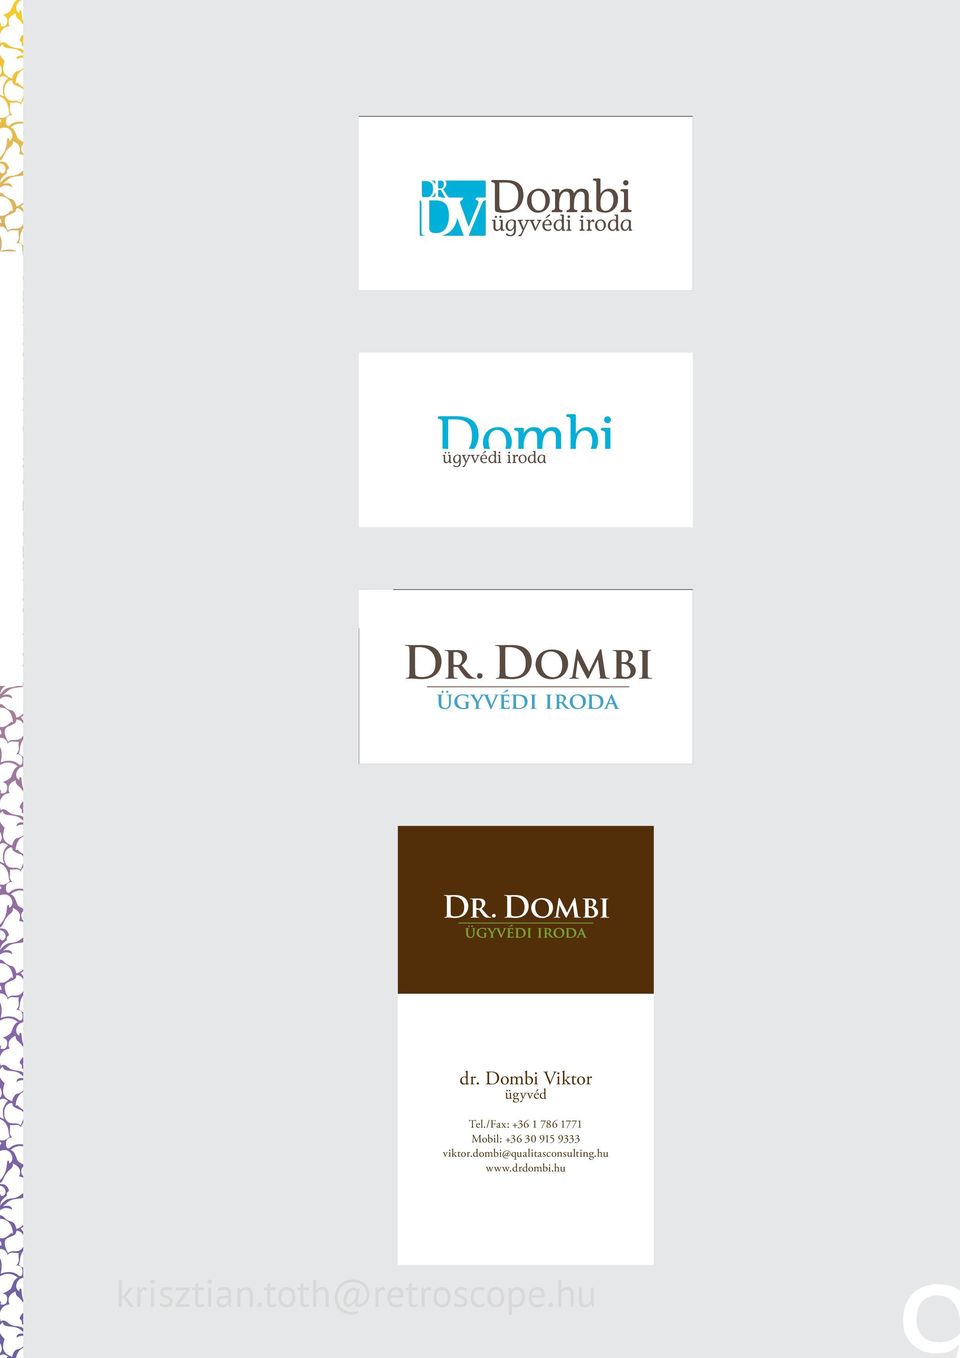 Dombi ügyvédi iroda DVDombi Dombi ügyvédi iroda ügyvédi iroda ügyvédi iroda DR DVDombi